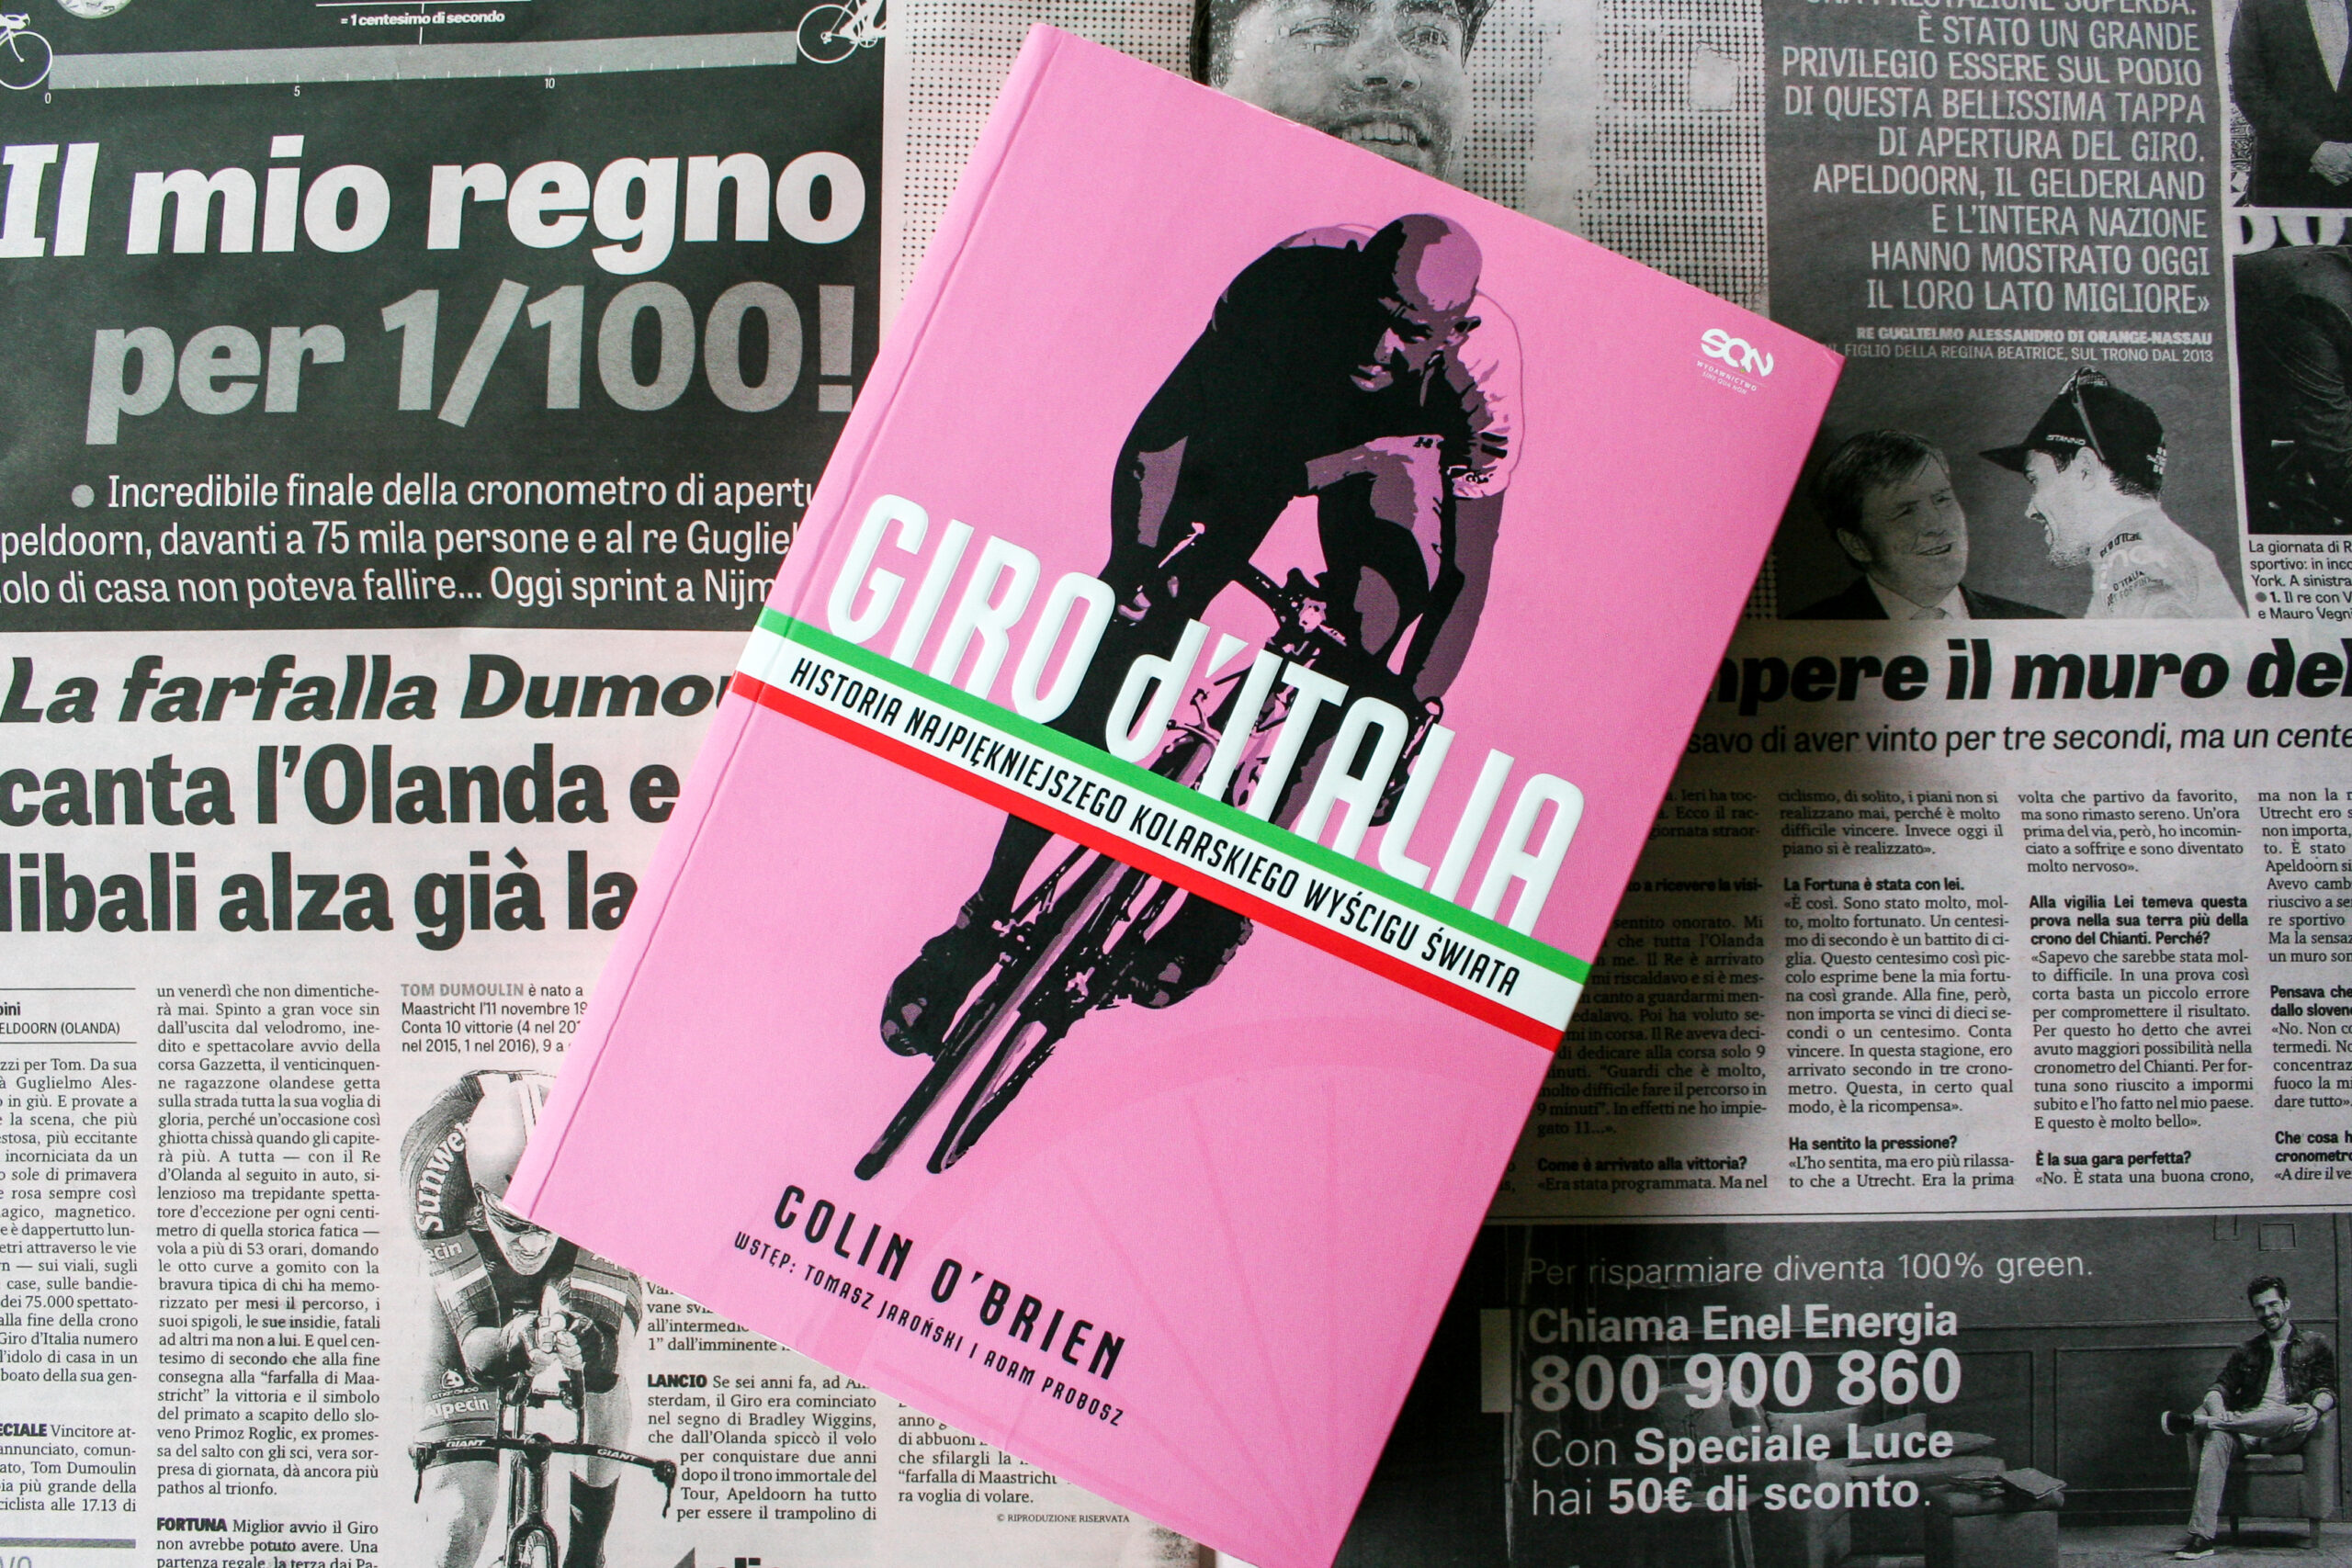 Recenzja i konkurs: “Giro d’Italia”